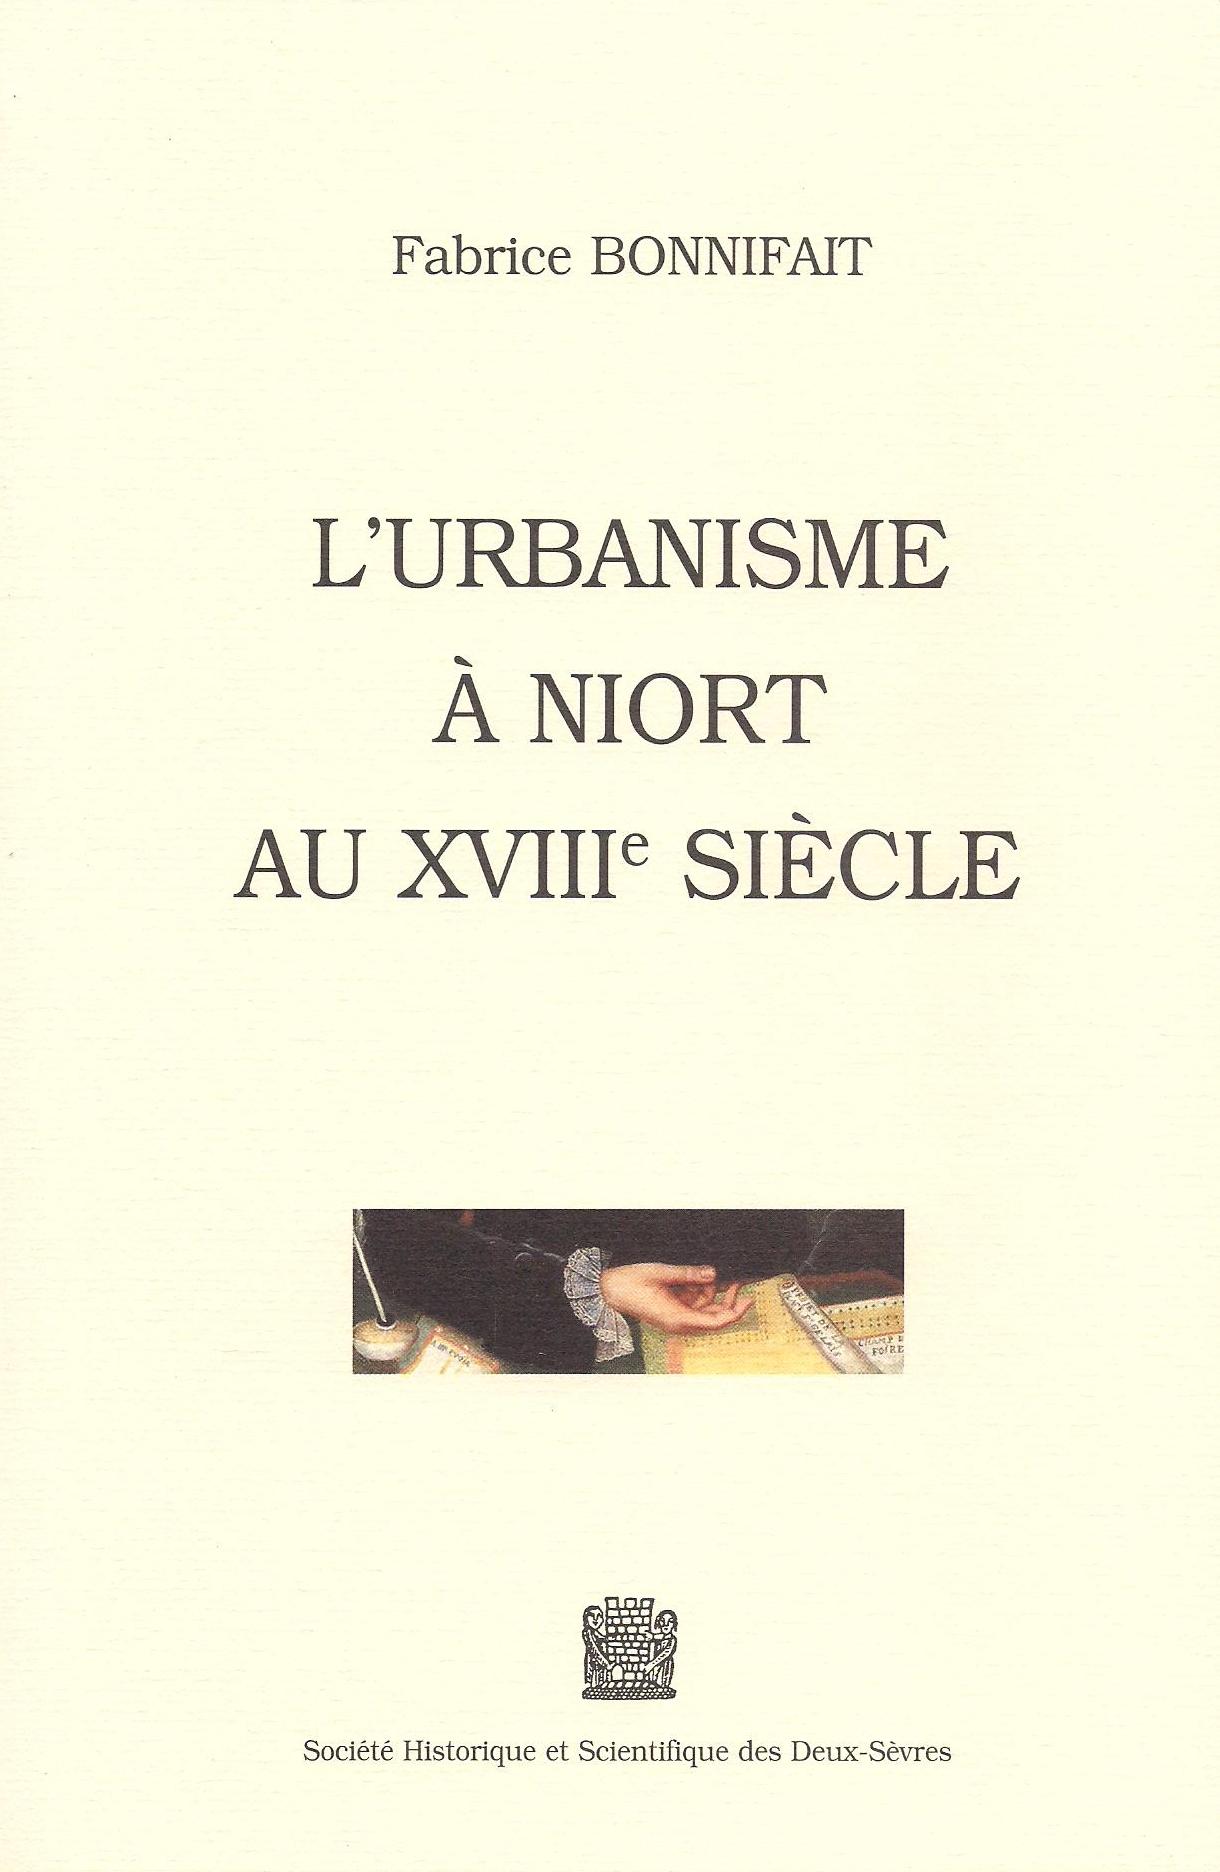 SHSDS : L'urbanisme à Niort au XVIIIème siècle